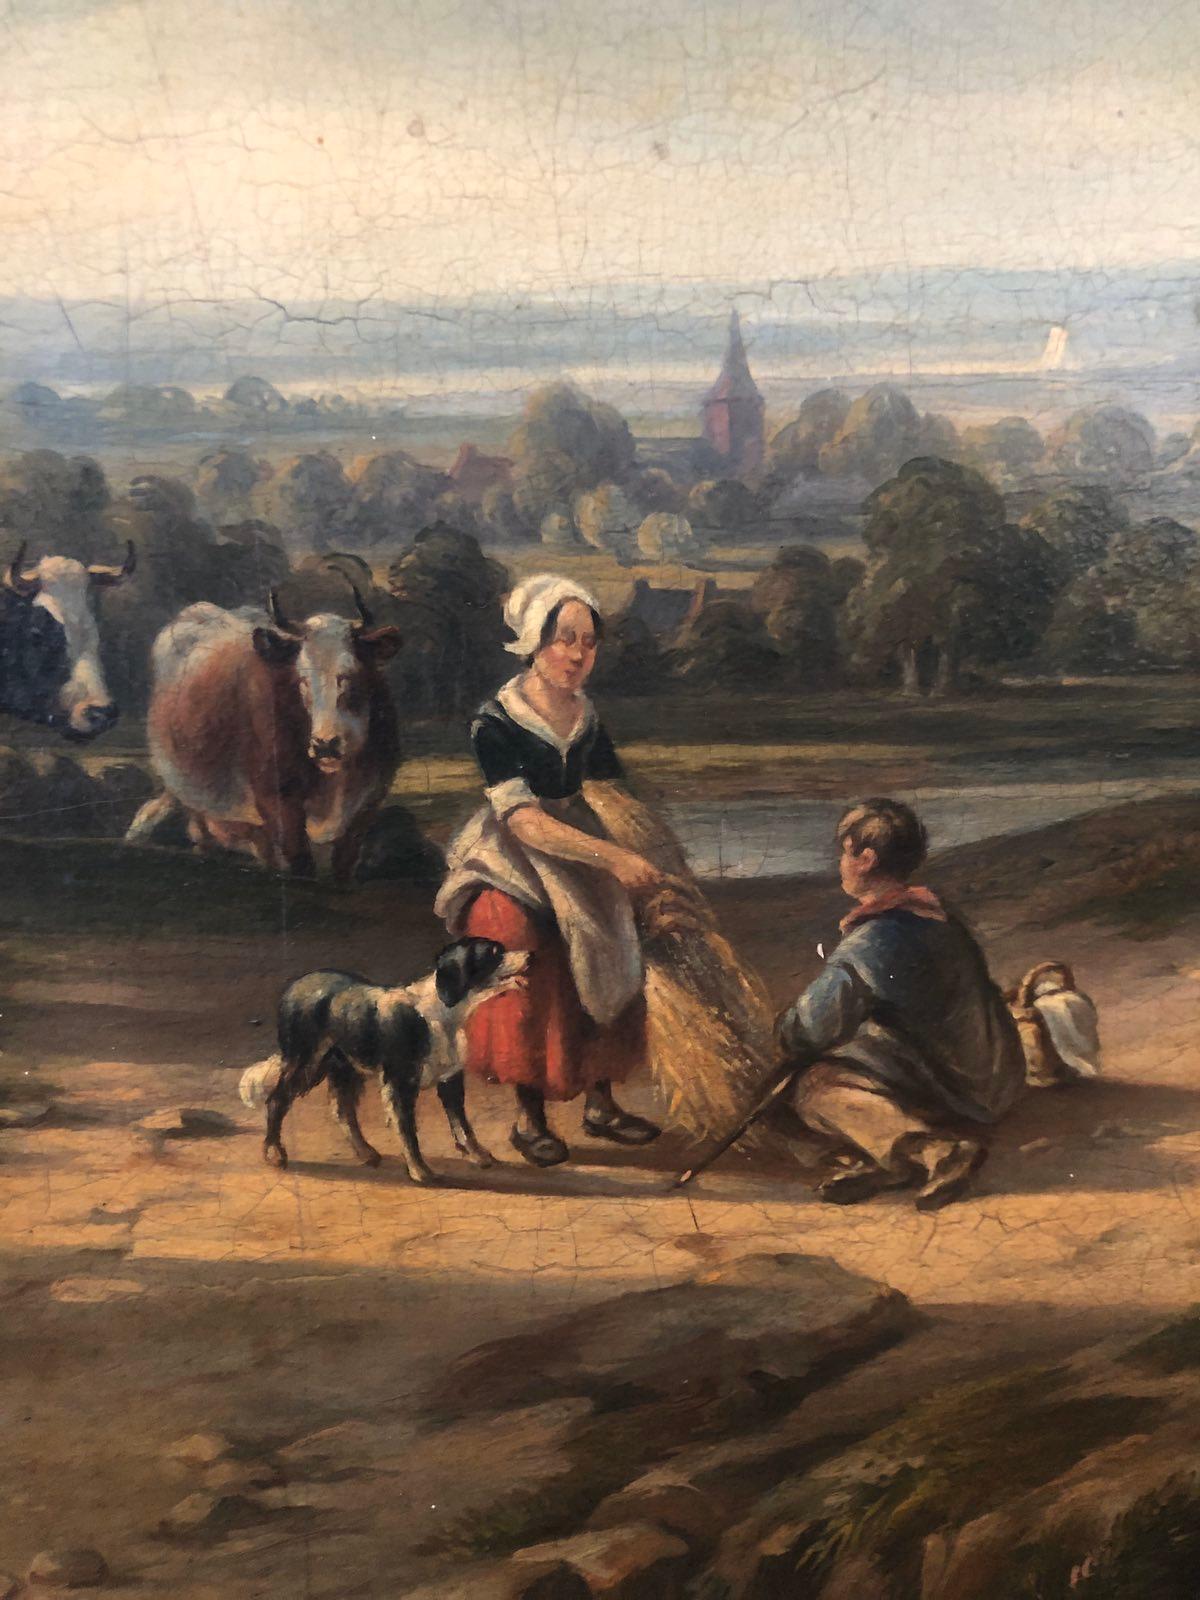 Romantic Verboeckhoven, Masterpiece Oil on Canvas ‘Landscape’, circa 1820